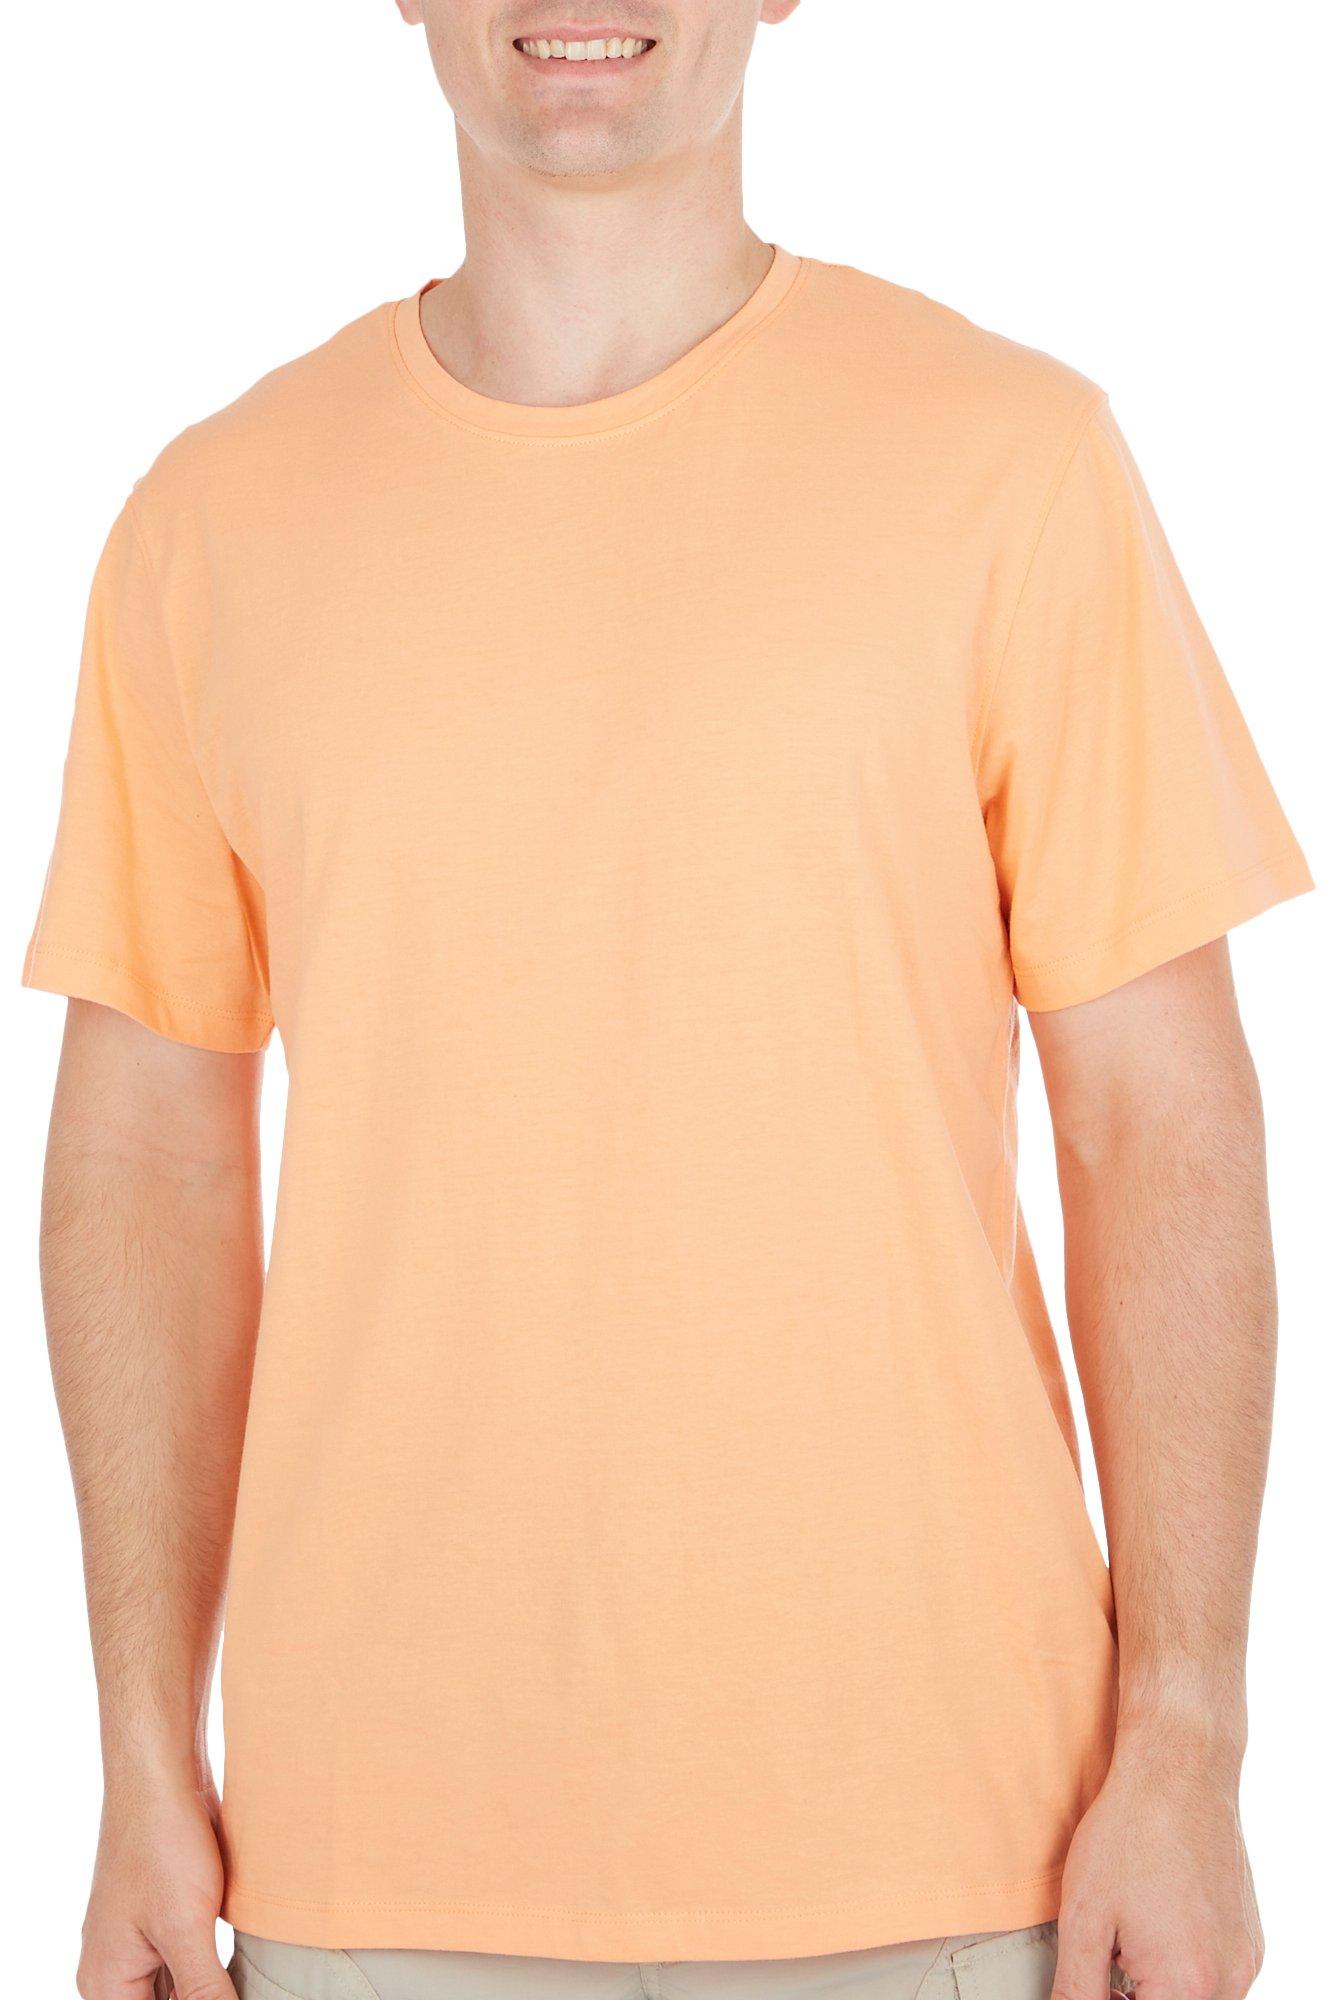 DVISION Mens Solid Short Sleeve T-Shirt